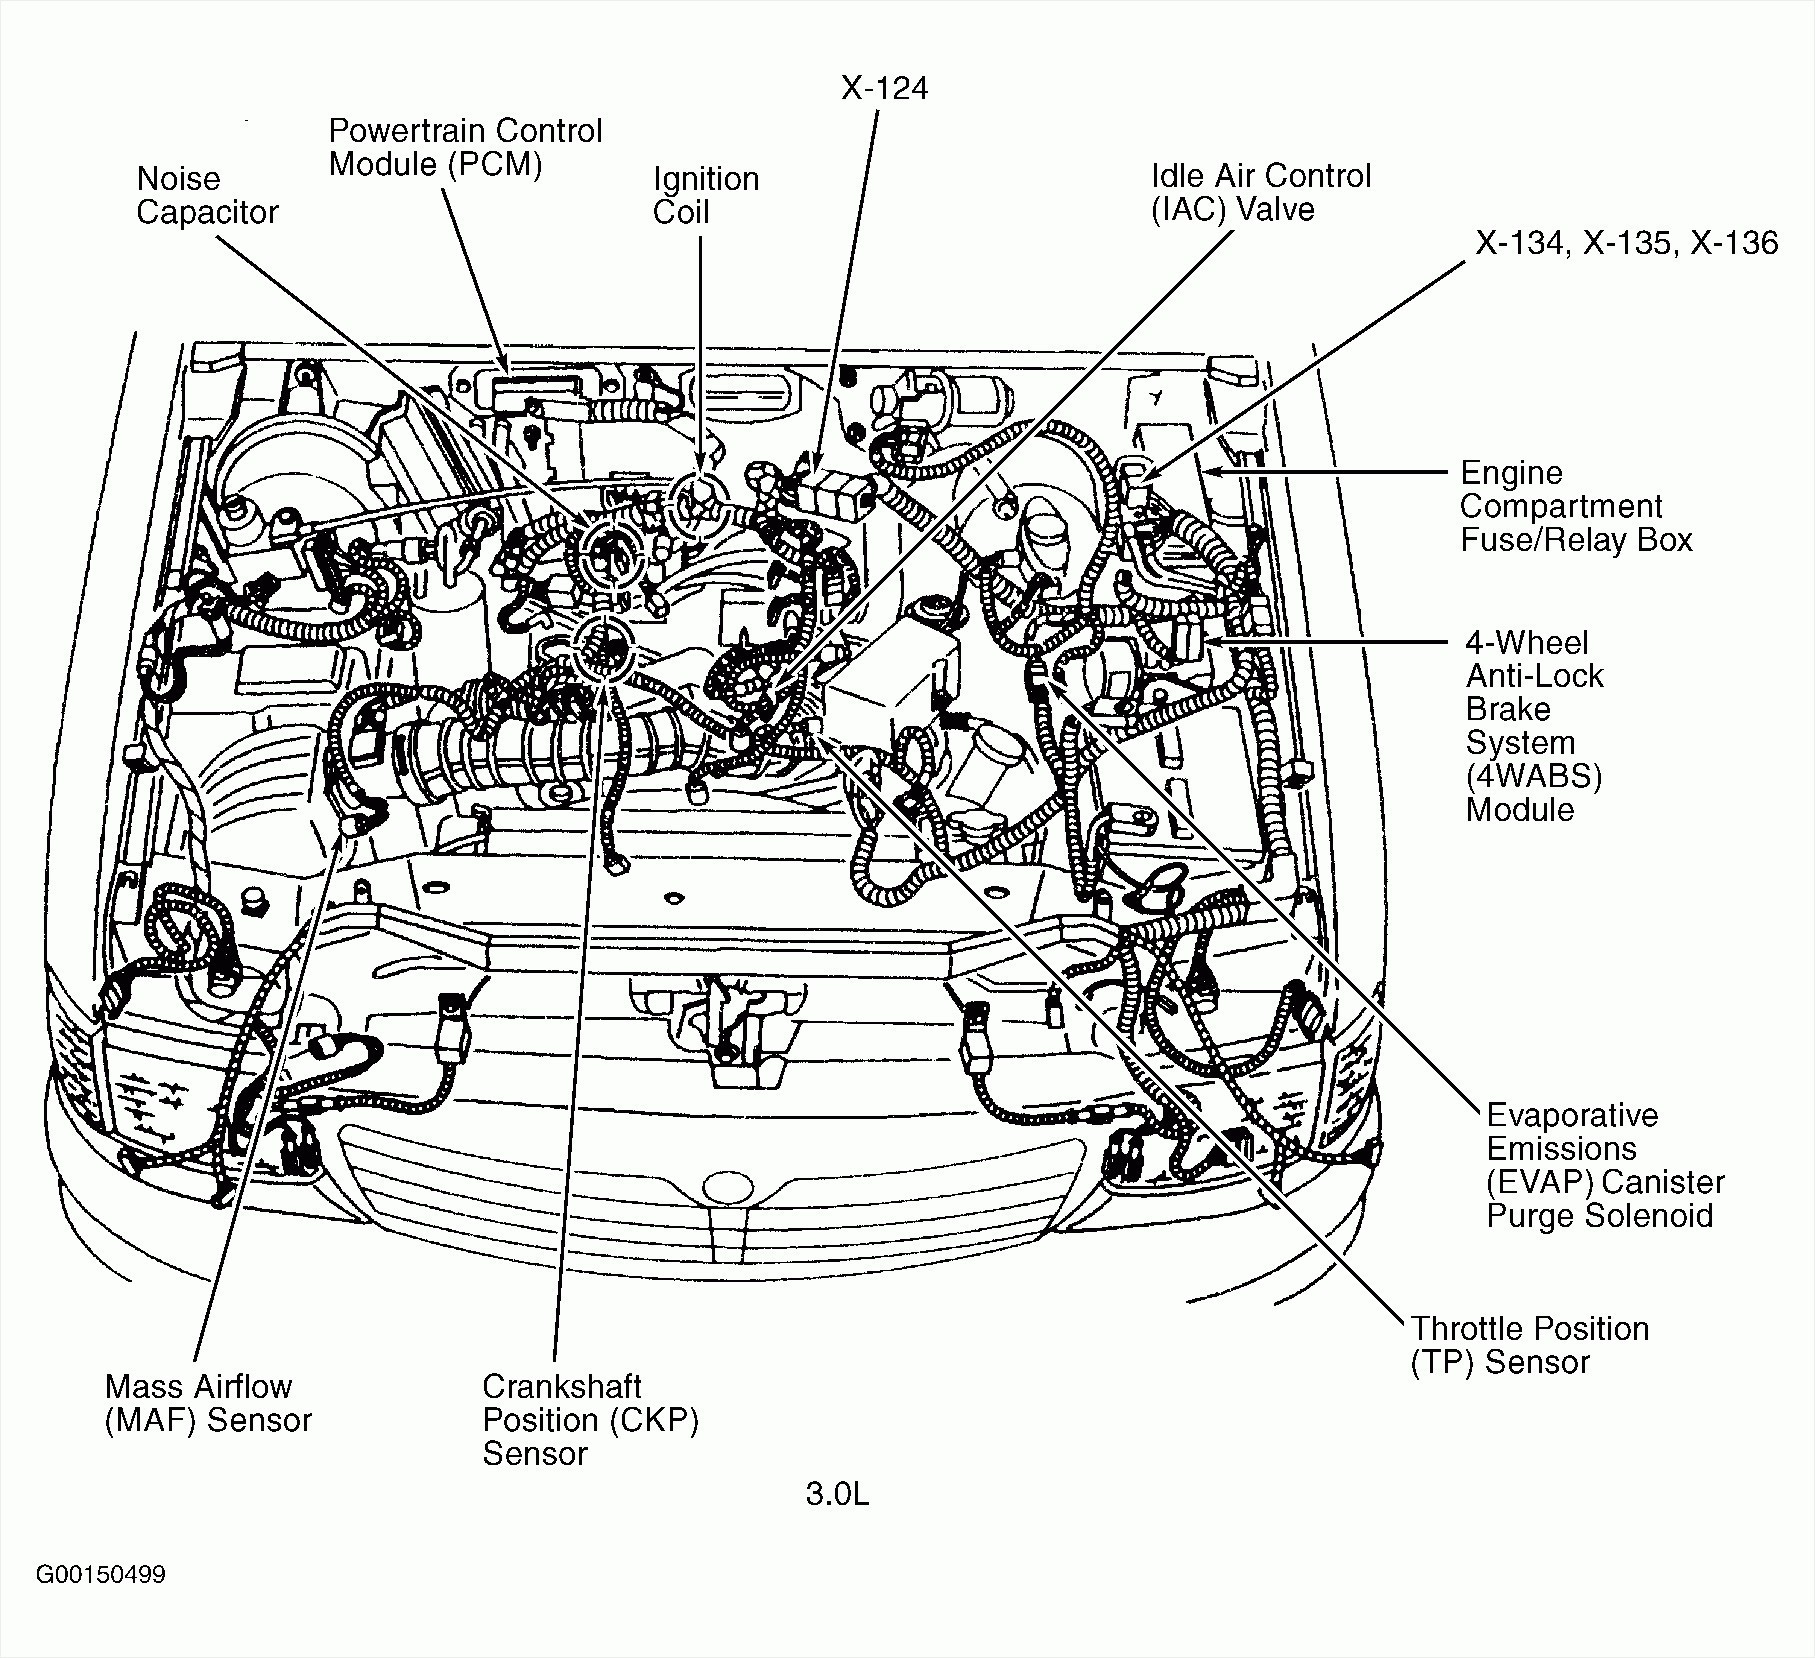 1998 Buick Lesabre Engine Diagram 2003 Buick Regal Engine Diagram Wiring Diagram Paper Of 1998 Buick Lesabre Engine Diagram